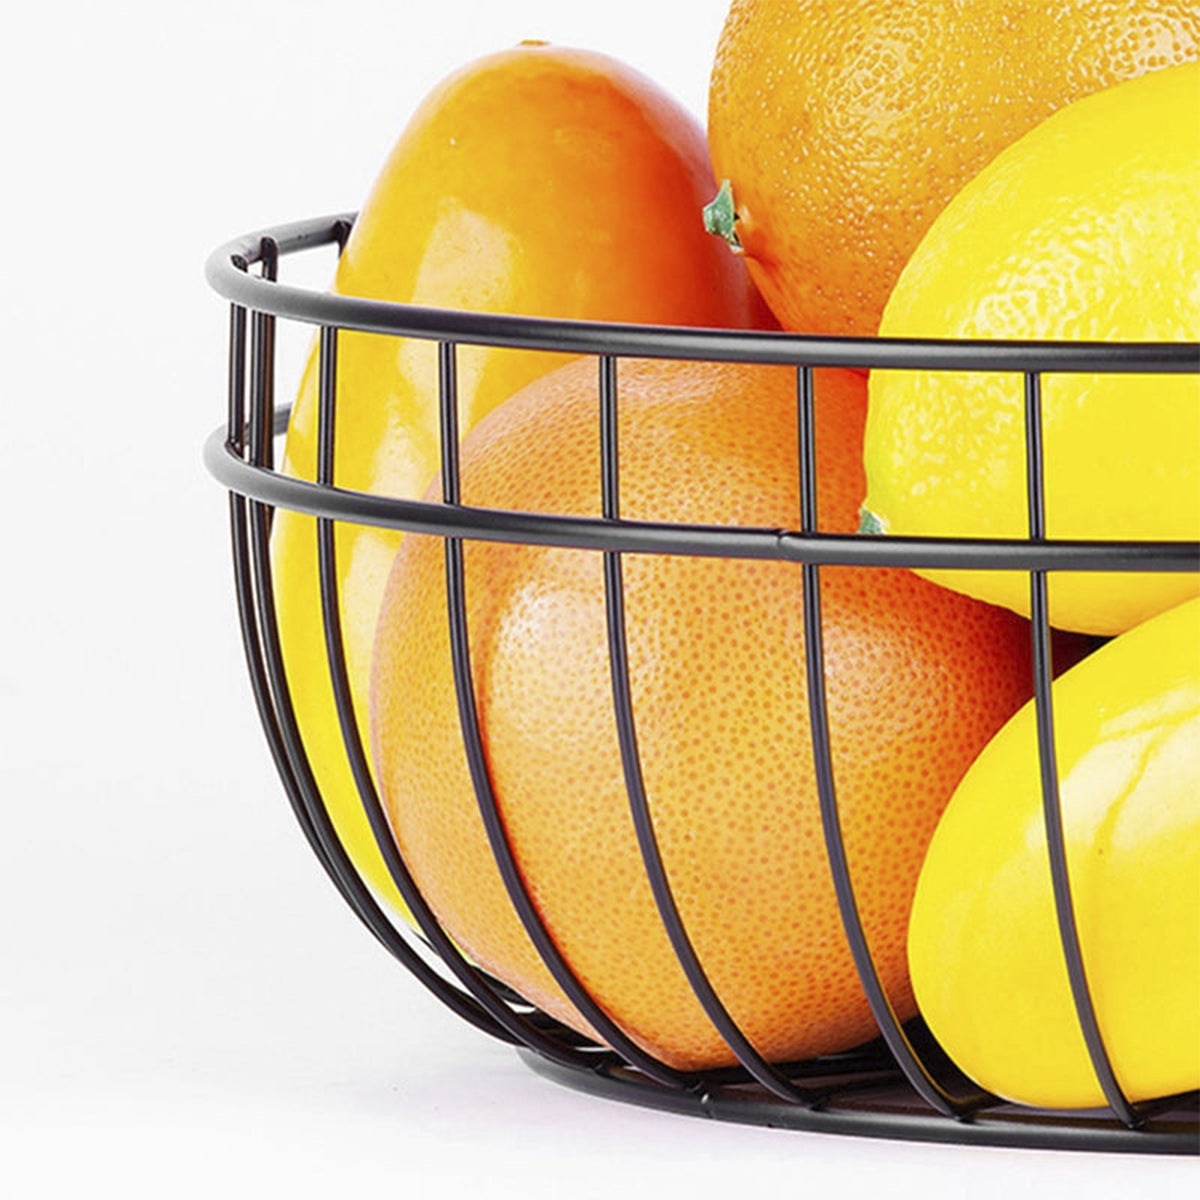 Fruit Basket With Banana Rack